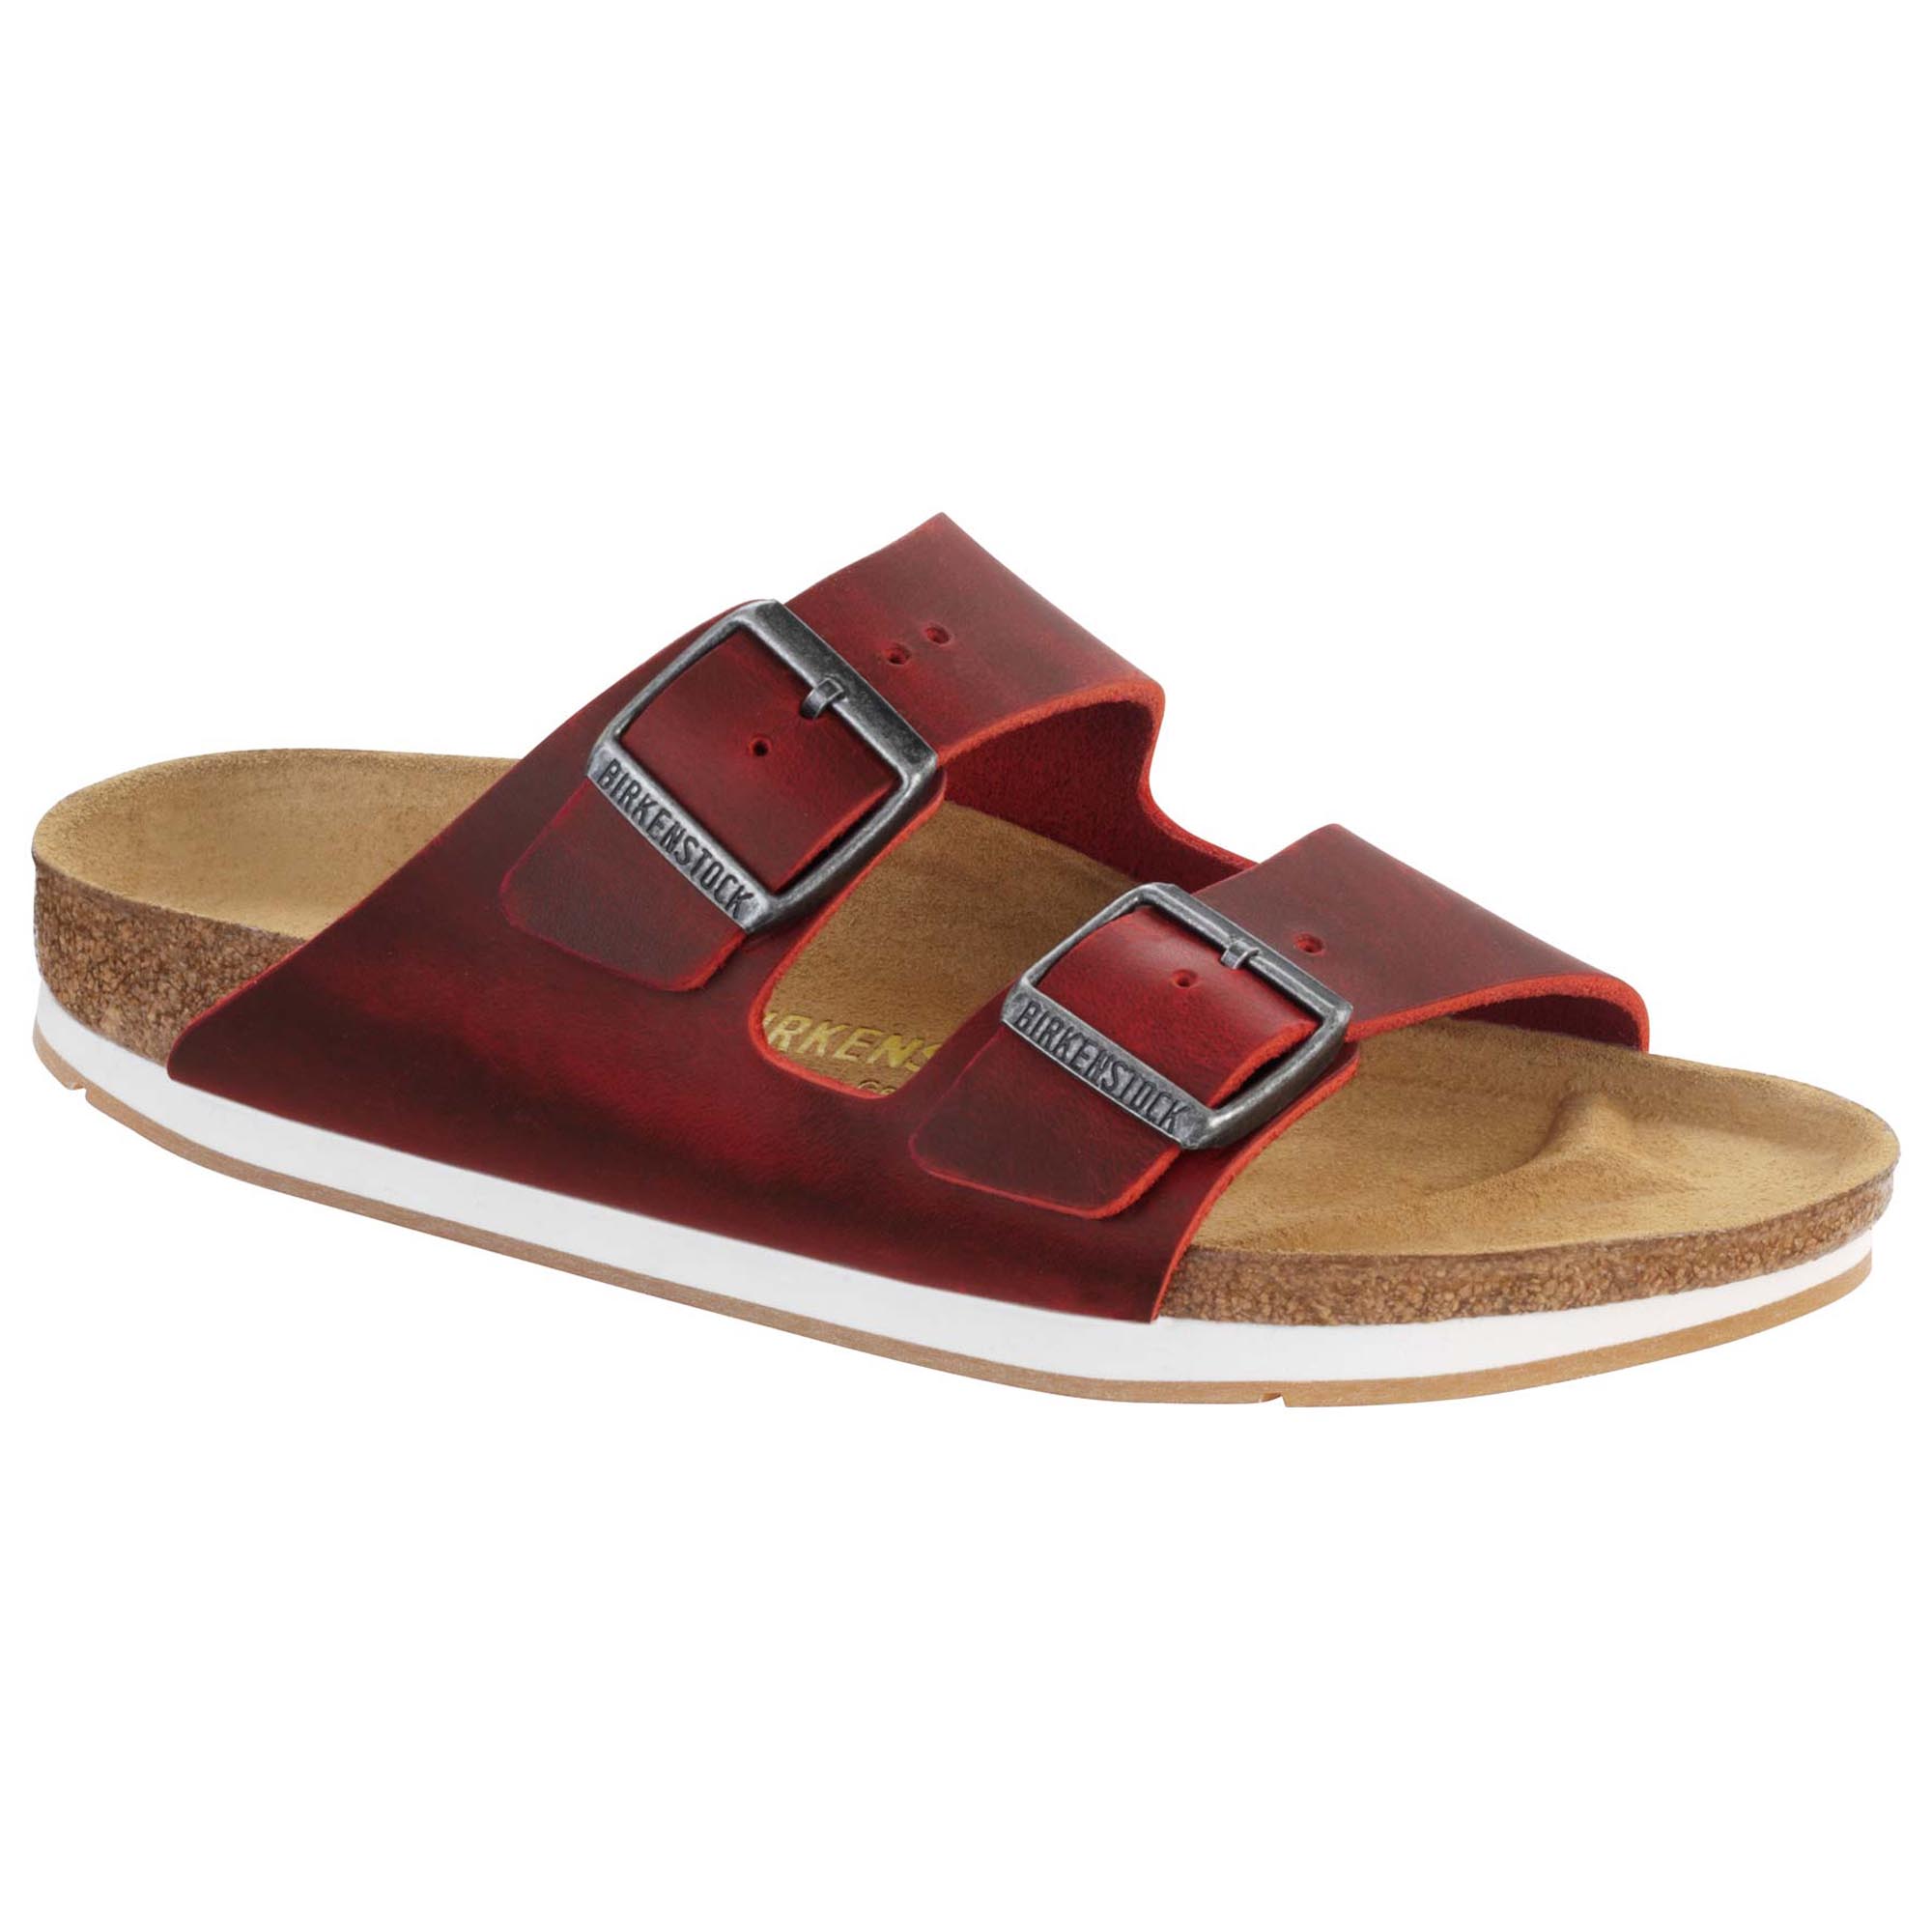 red leather birkenstock sandals